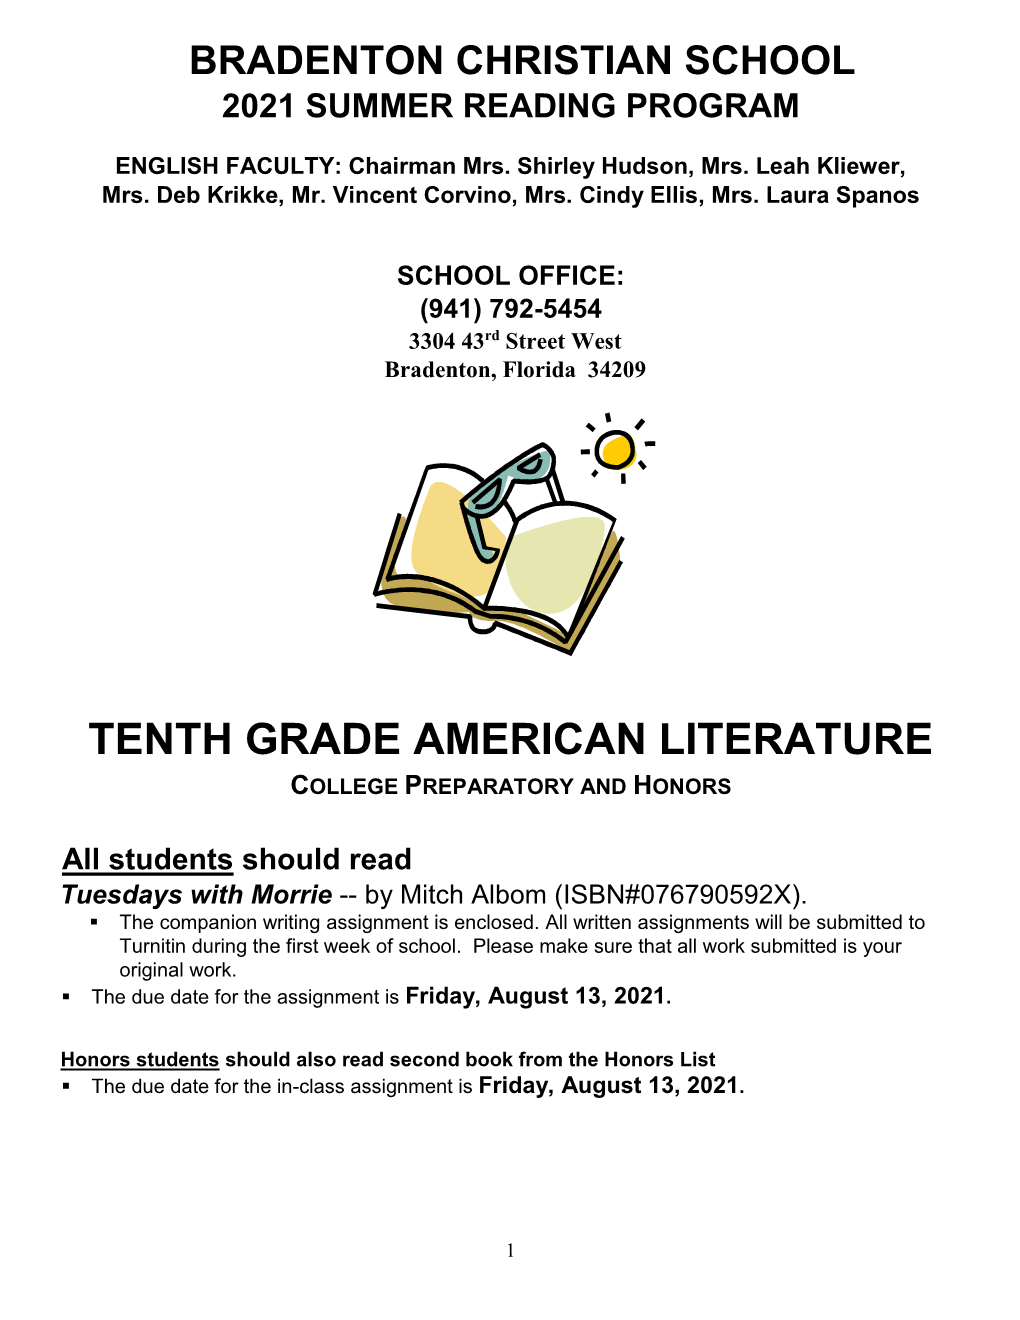 Tenth Grade American Literature College Preparatory and Honors